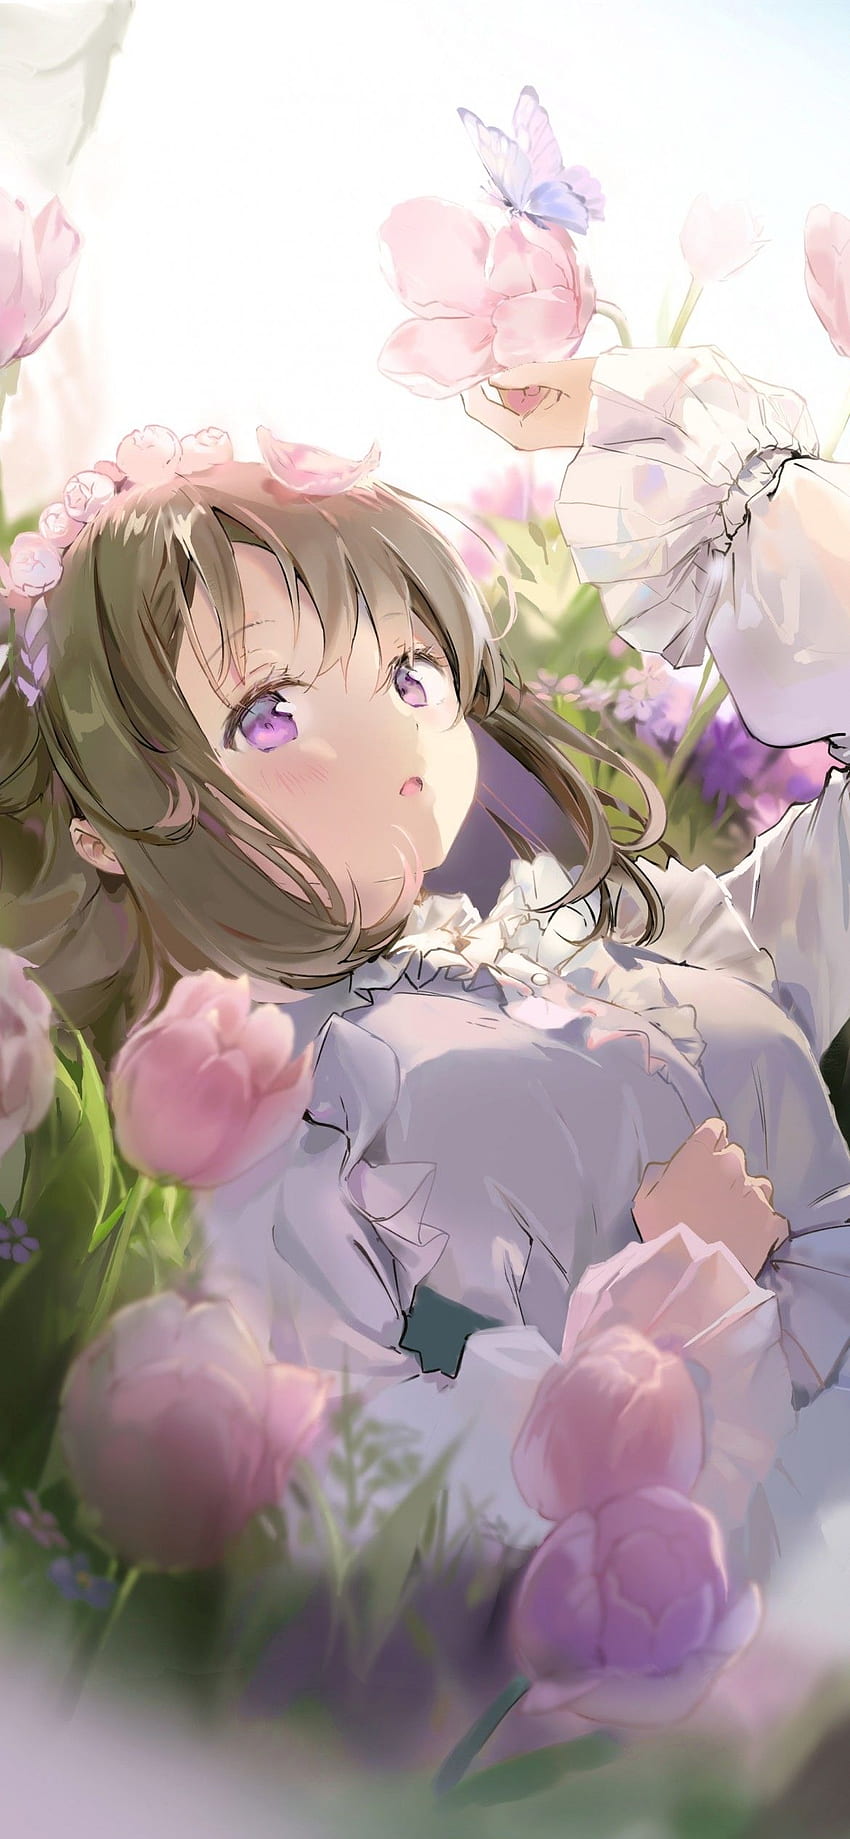 beautiful Anime flower girl by yukikomisuto on DeviantArt